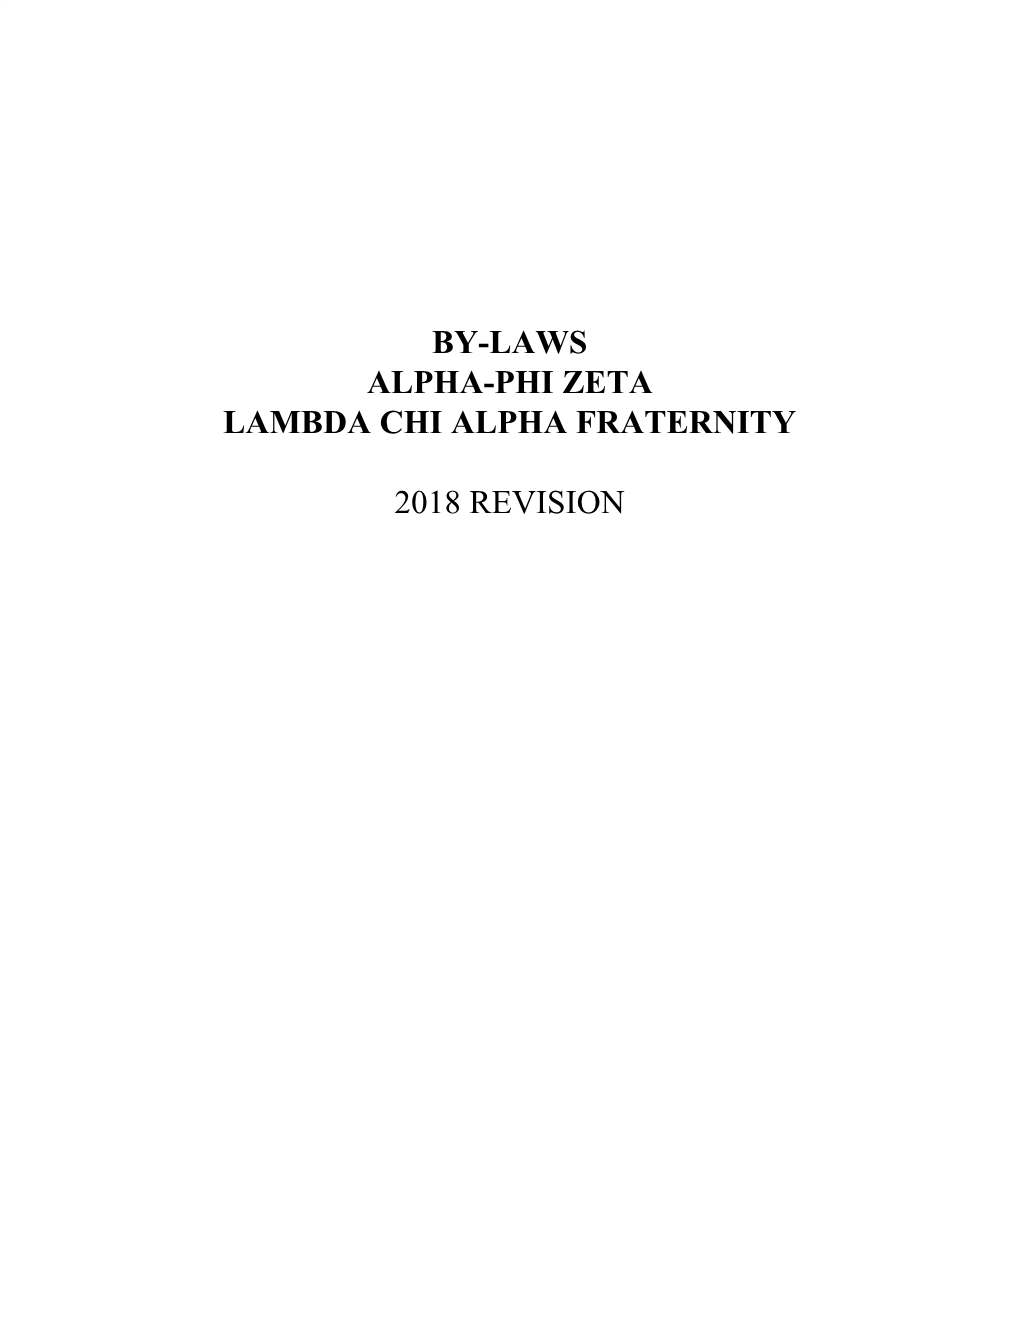 By-Laws Alpha-Phi Zeta Lambda Chi Alpha Fraternity 2018